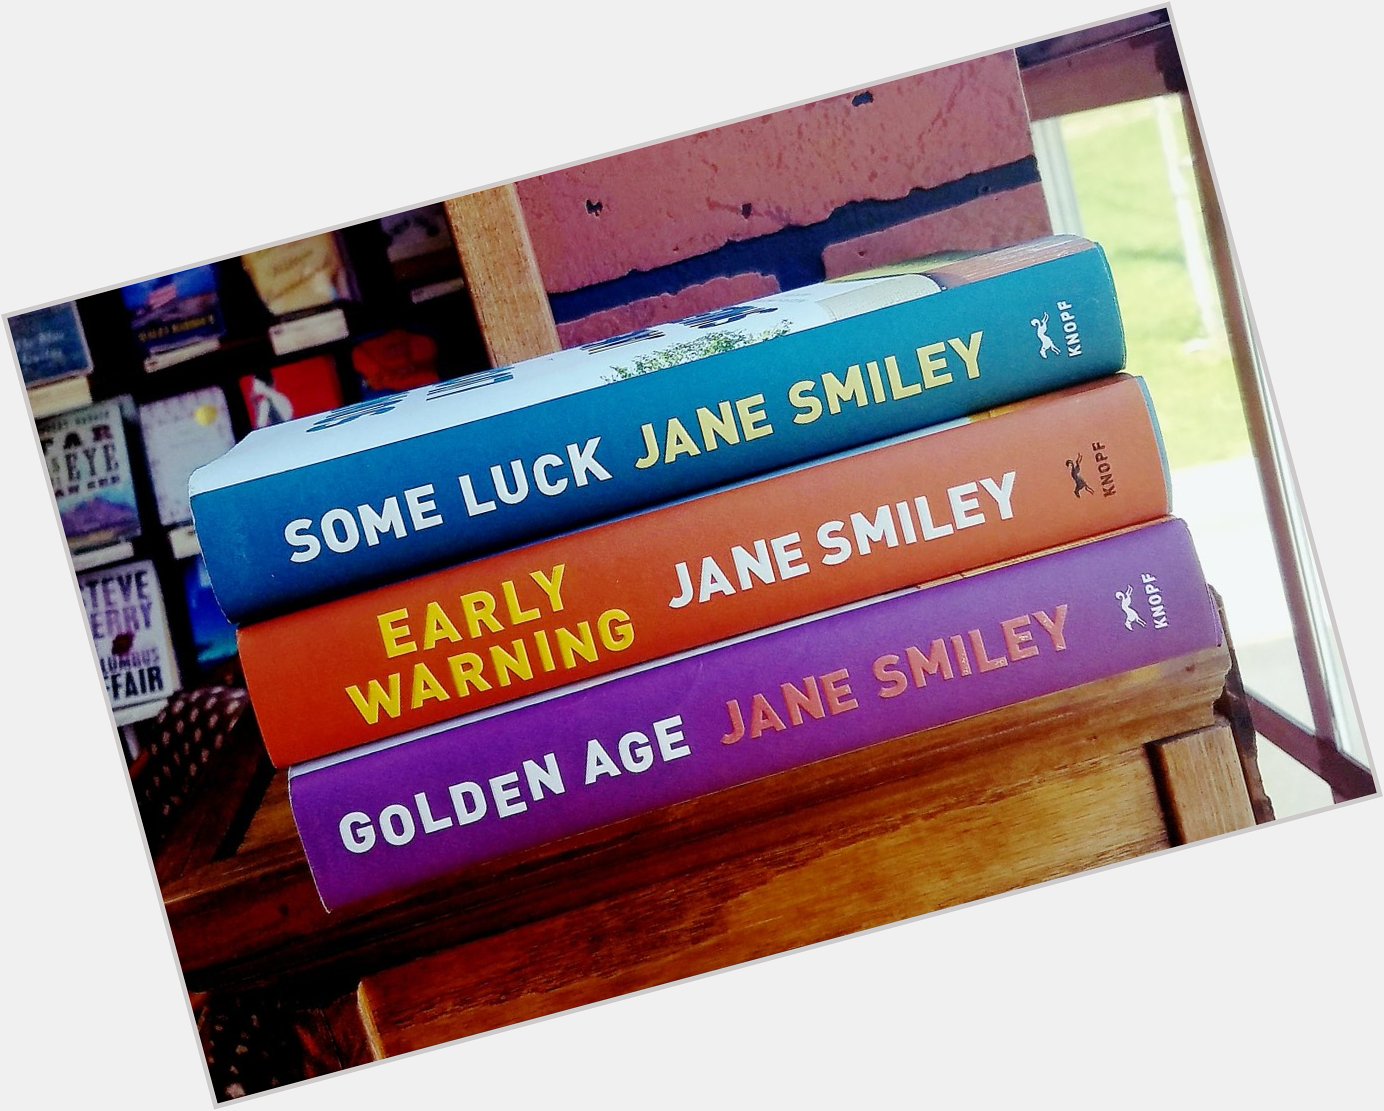 Happy Birthday to Jane Smiley!  